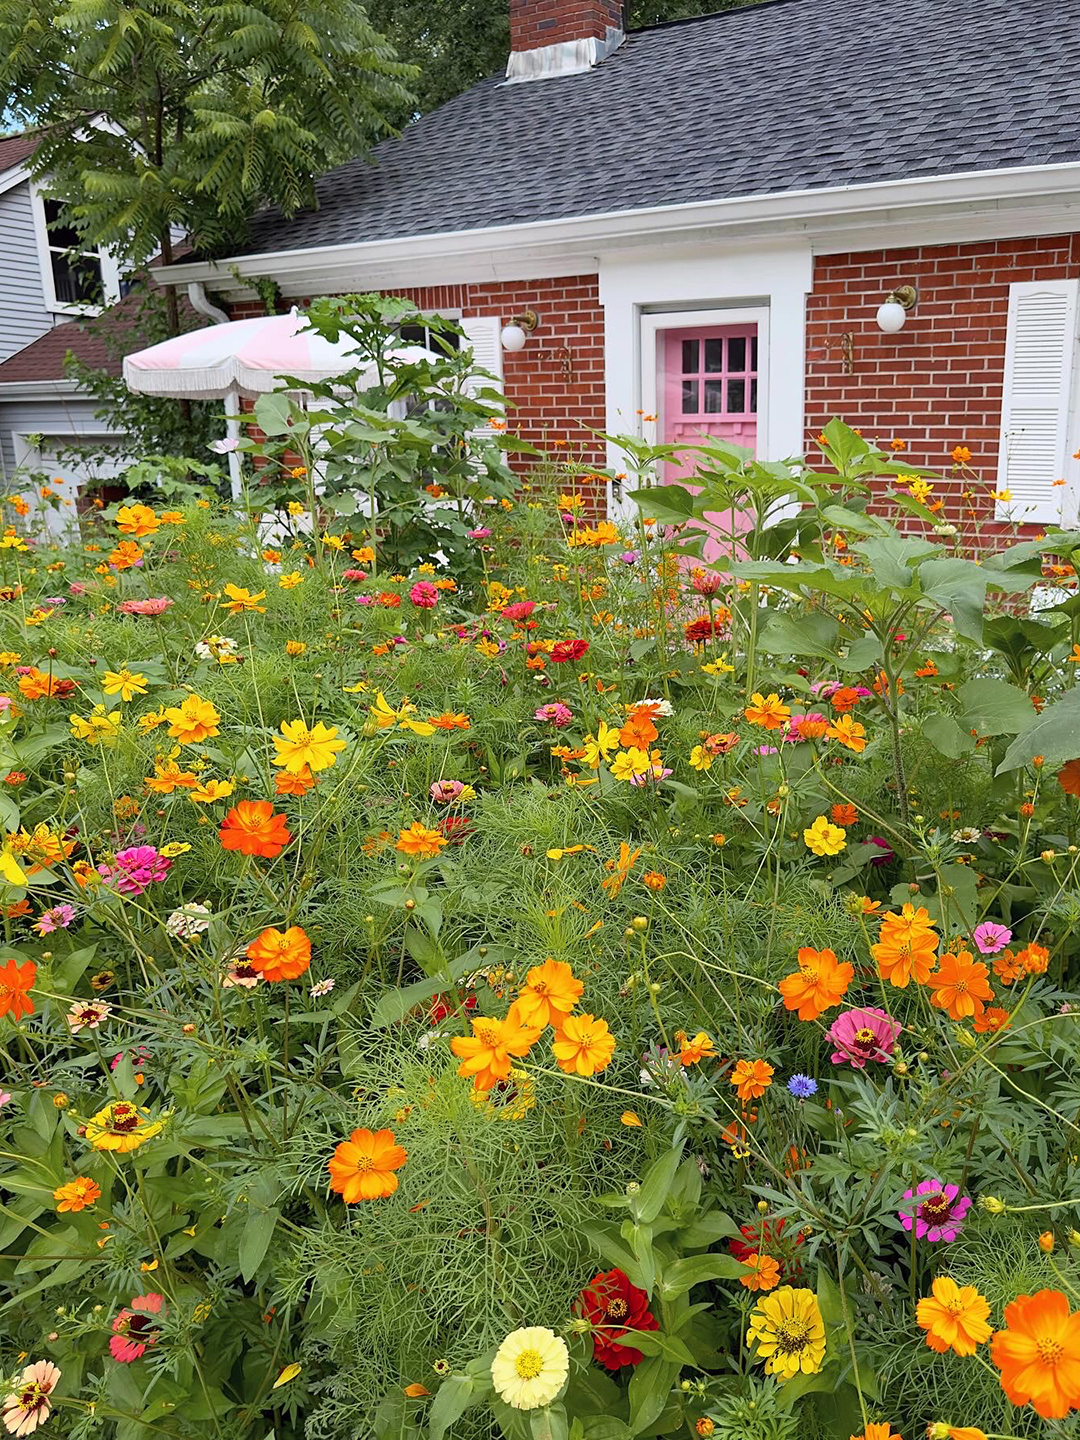 Wildflower garden in front of house